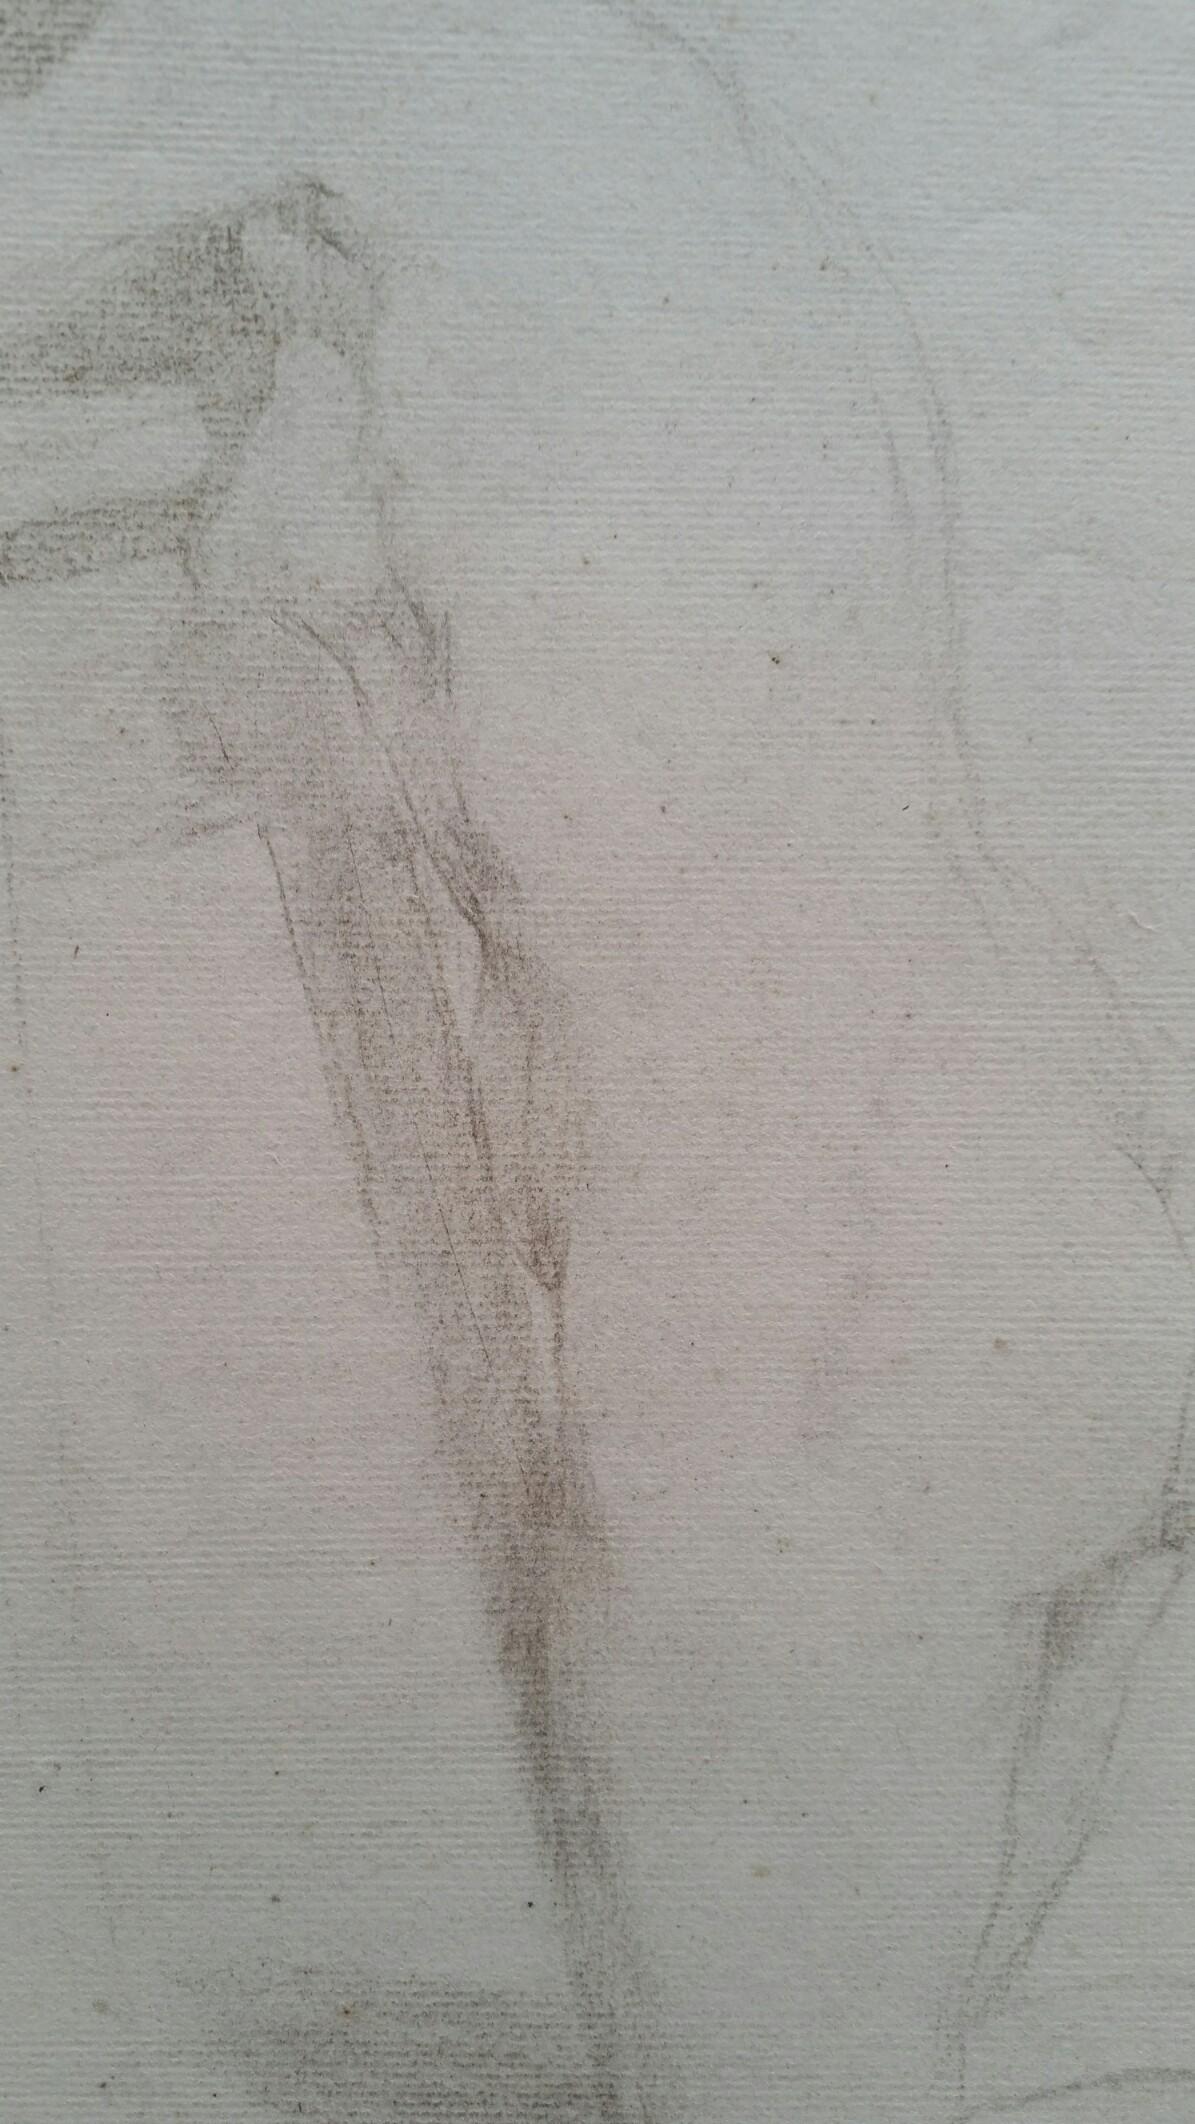 English Graphite Portrait Sketch of Female Nude, Kneeling For Sale 9